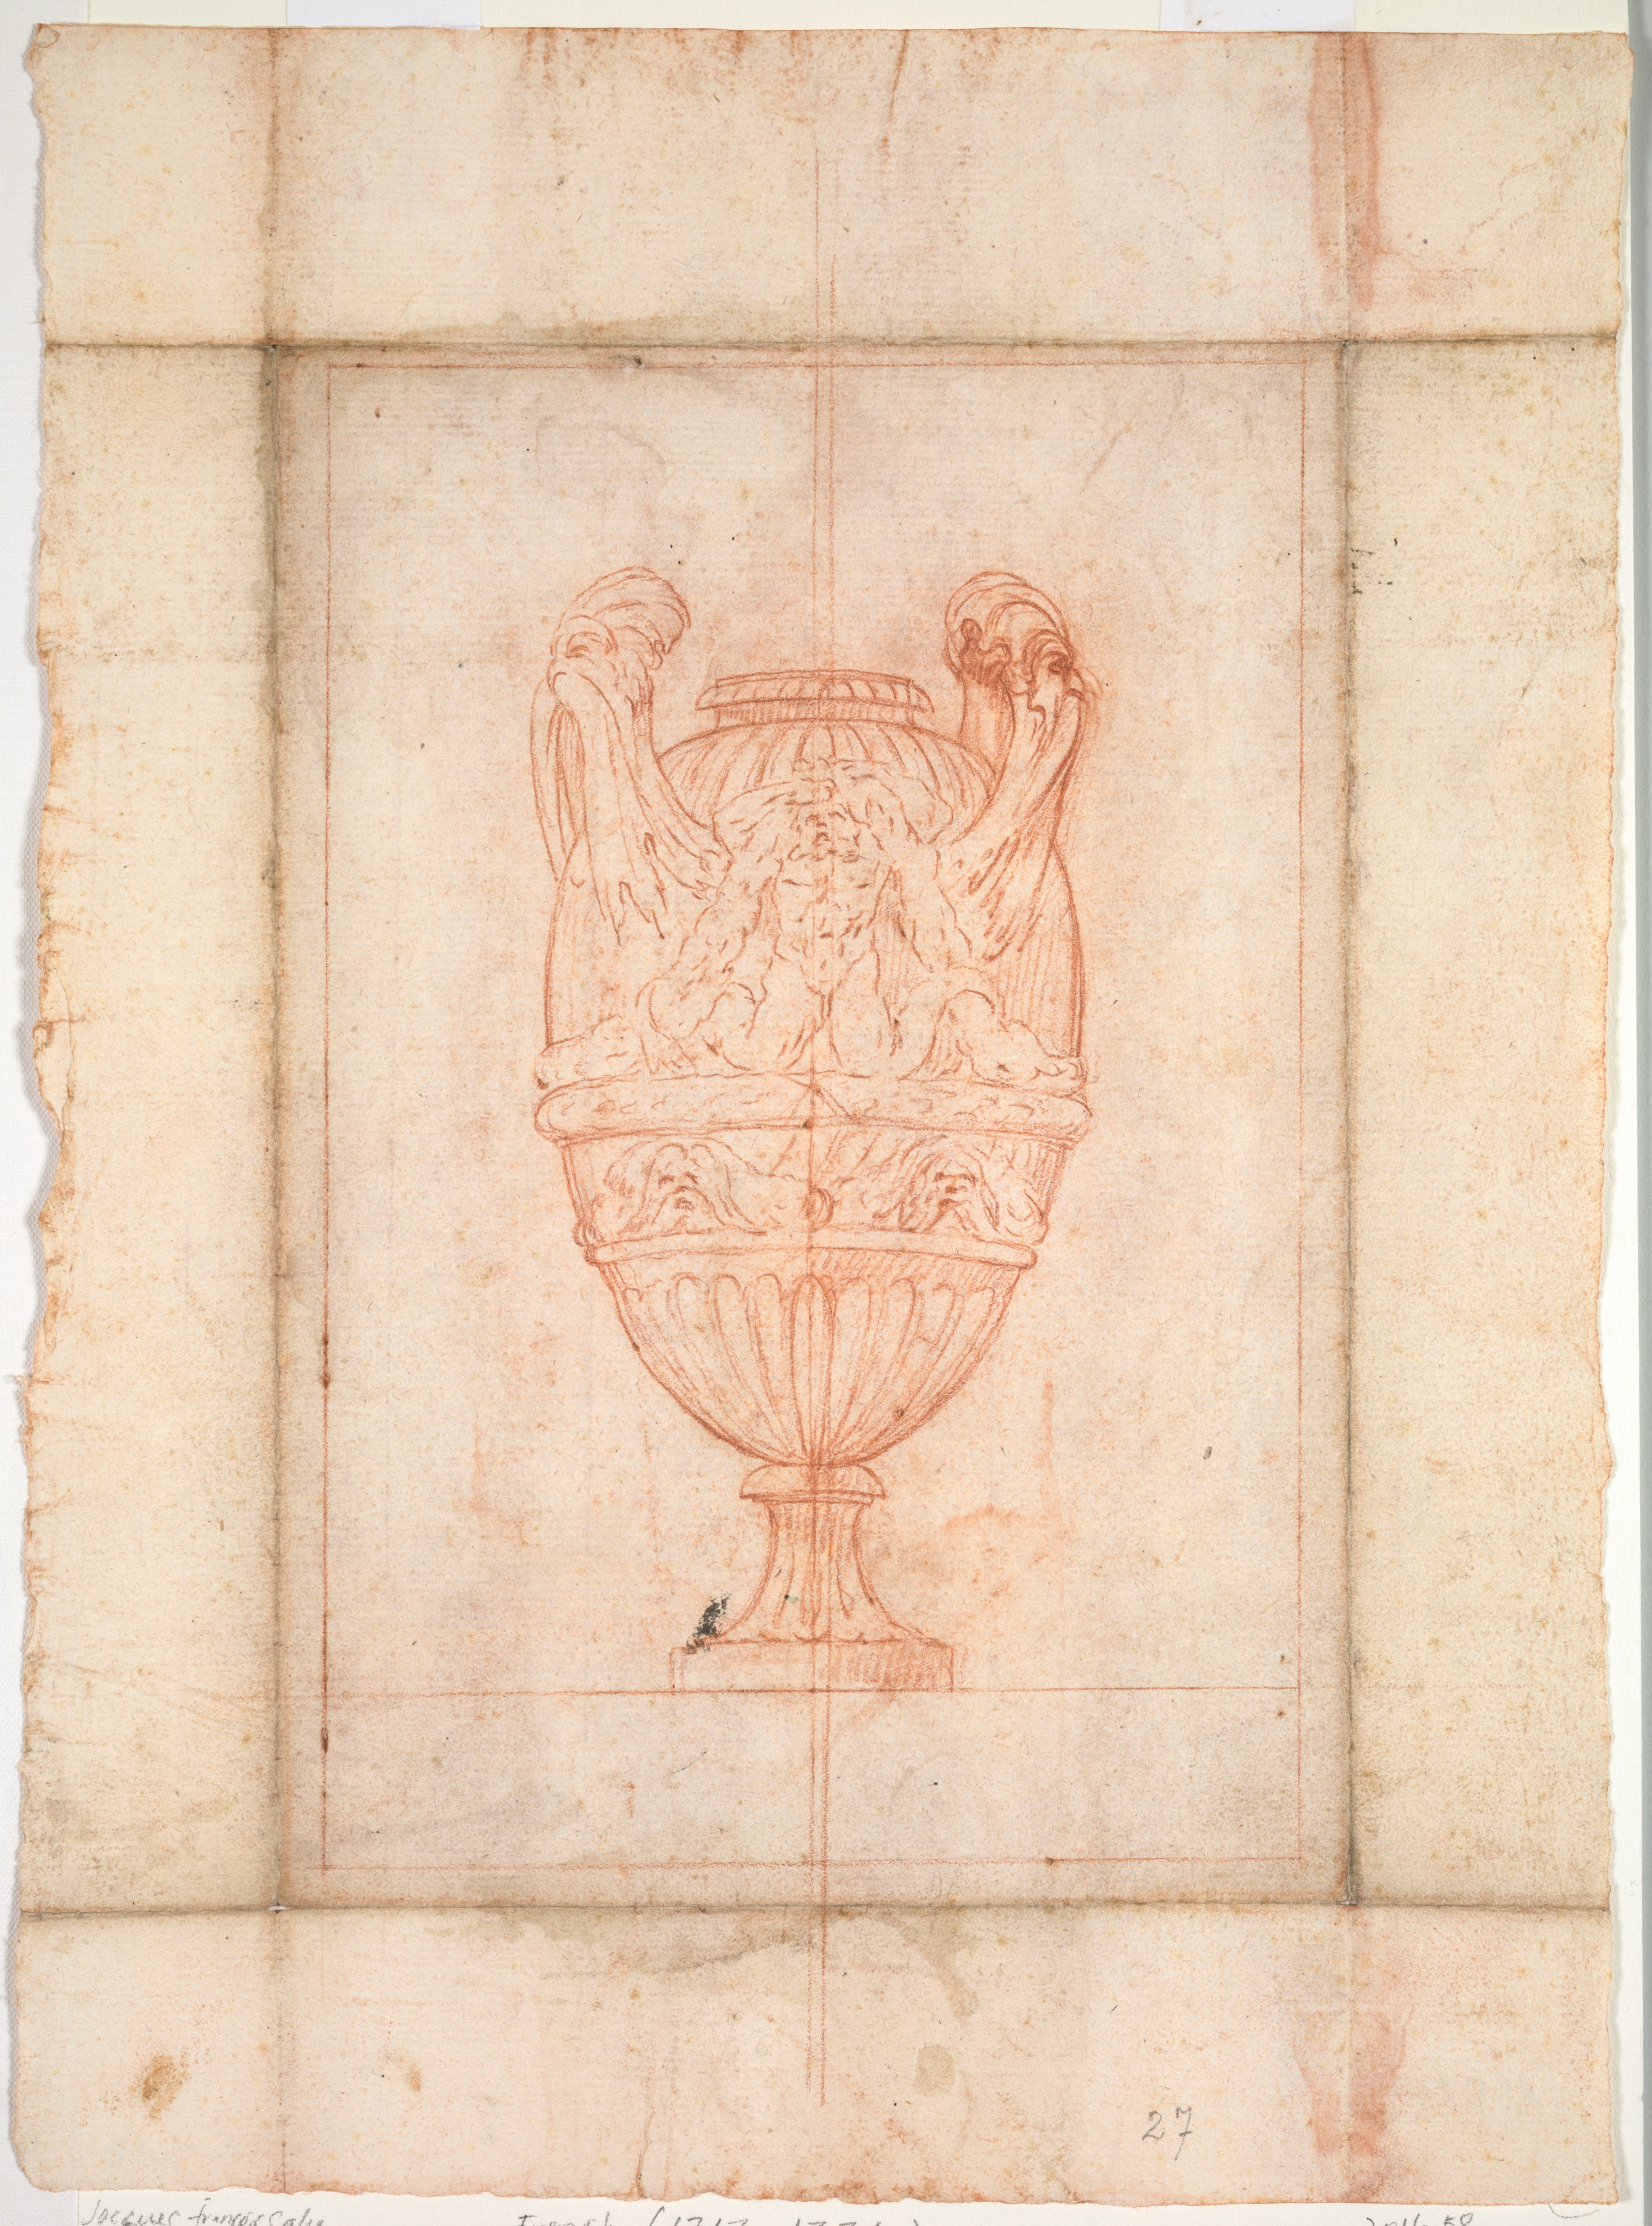 Vase Design for 'Suite of Vases': Plate 27